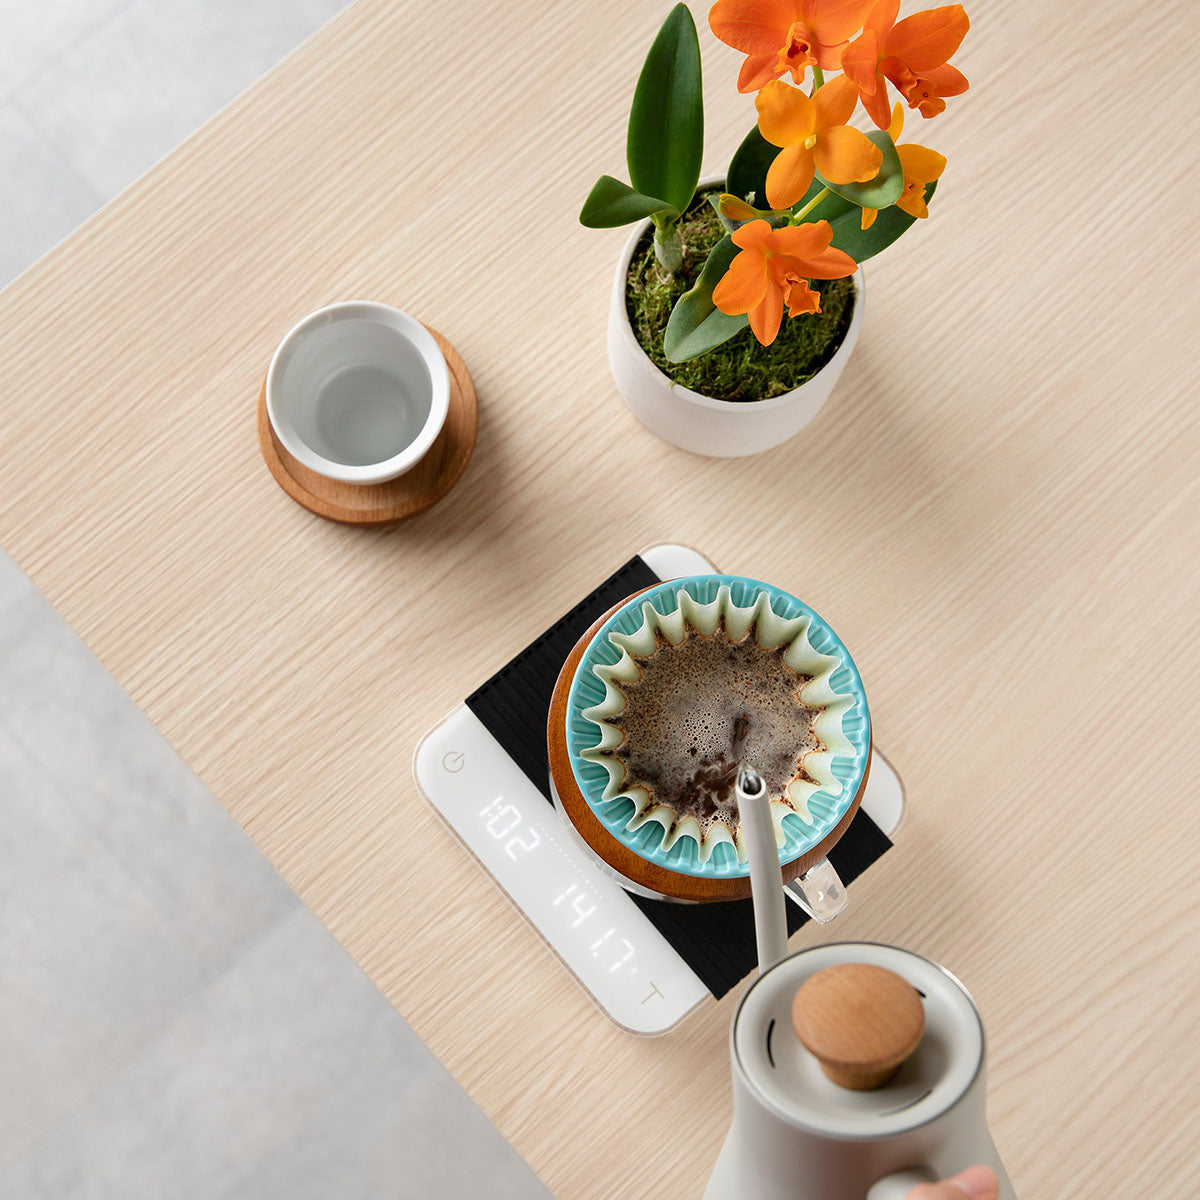  Acaia Pearl Model S Professional-Grade Digital Smart Coffee  Scale - White : Home & Kitchen